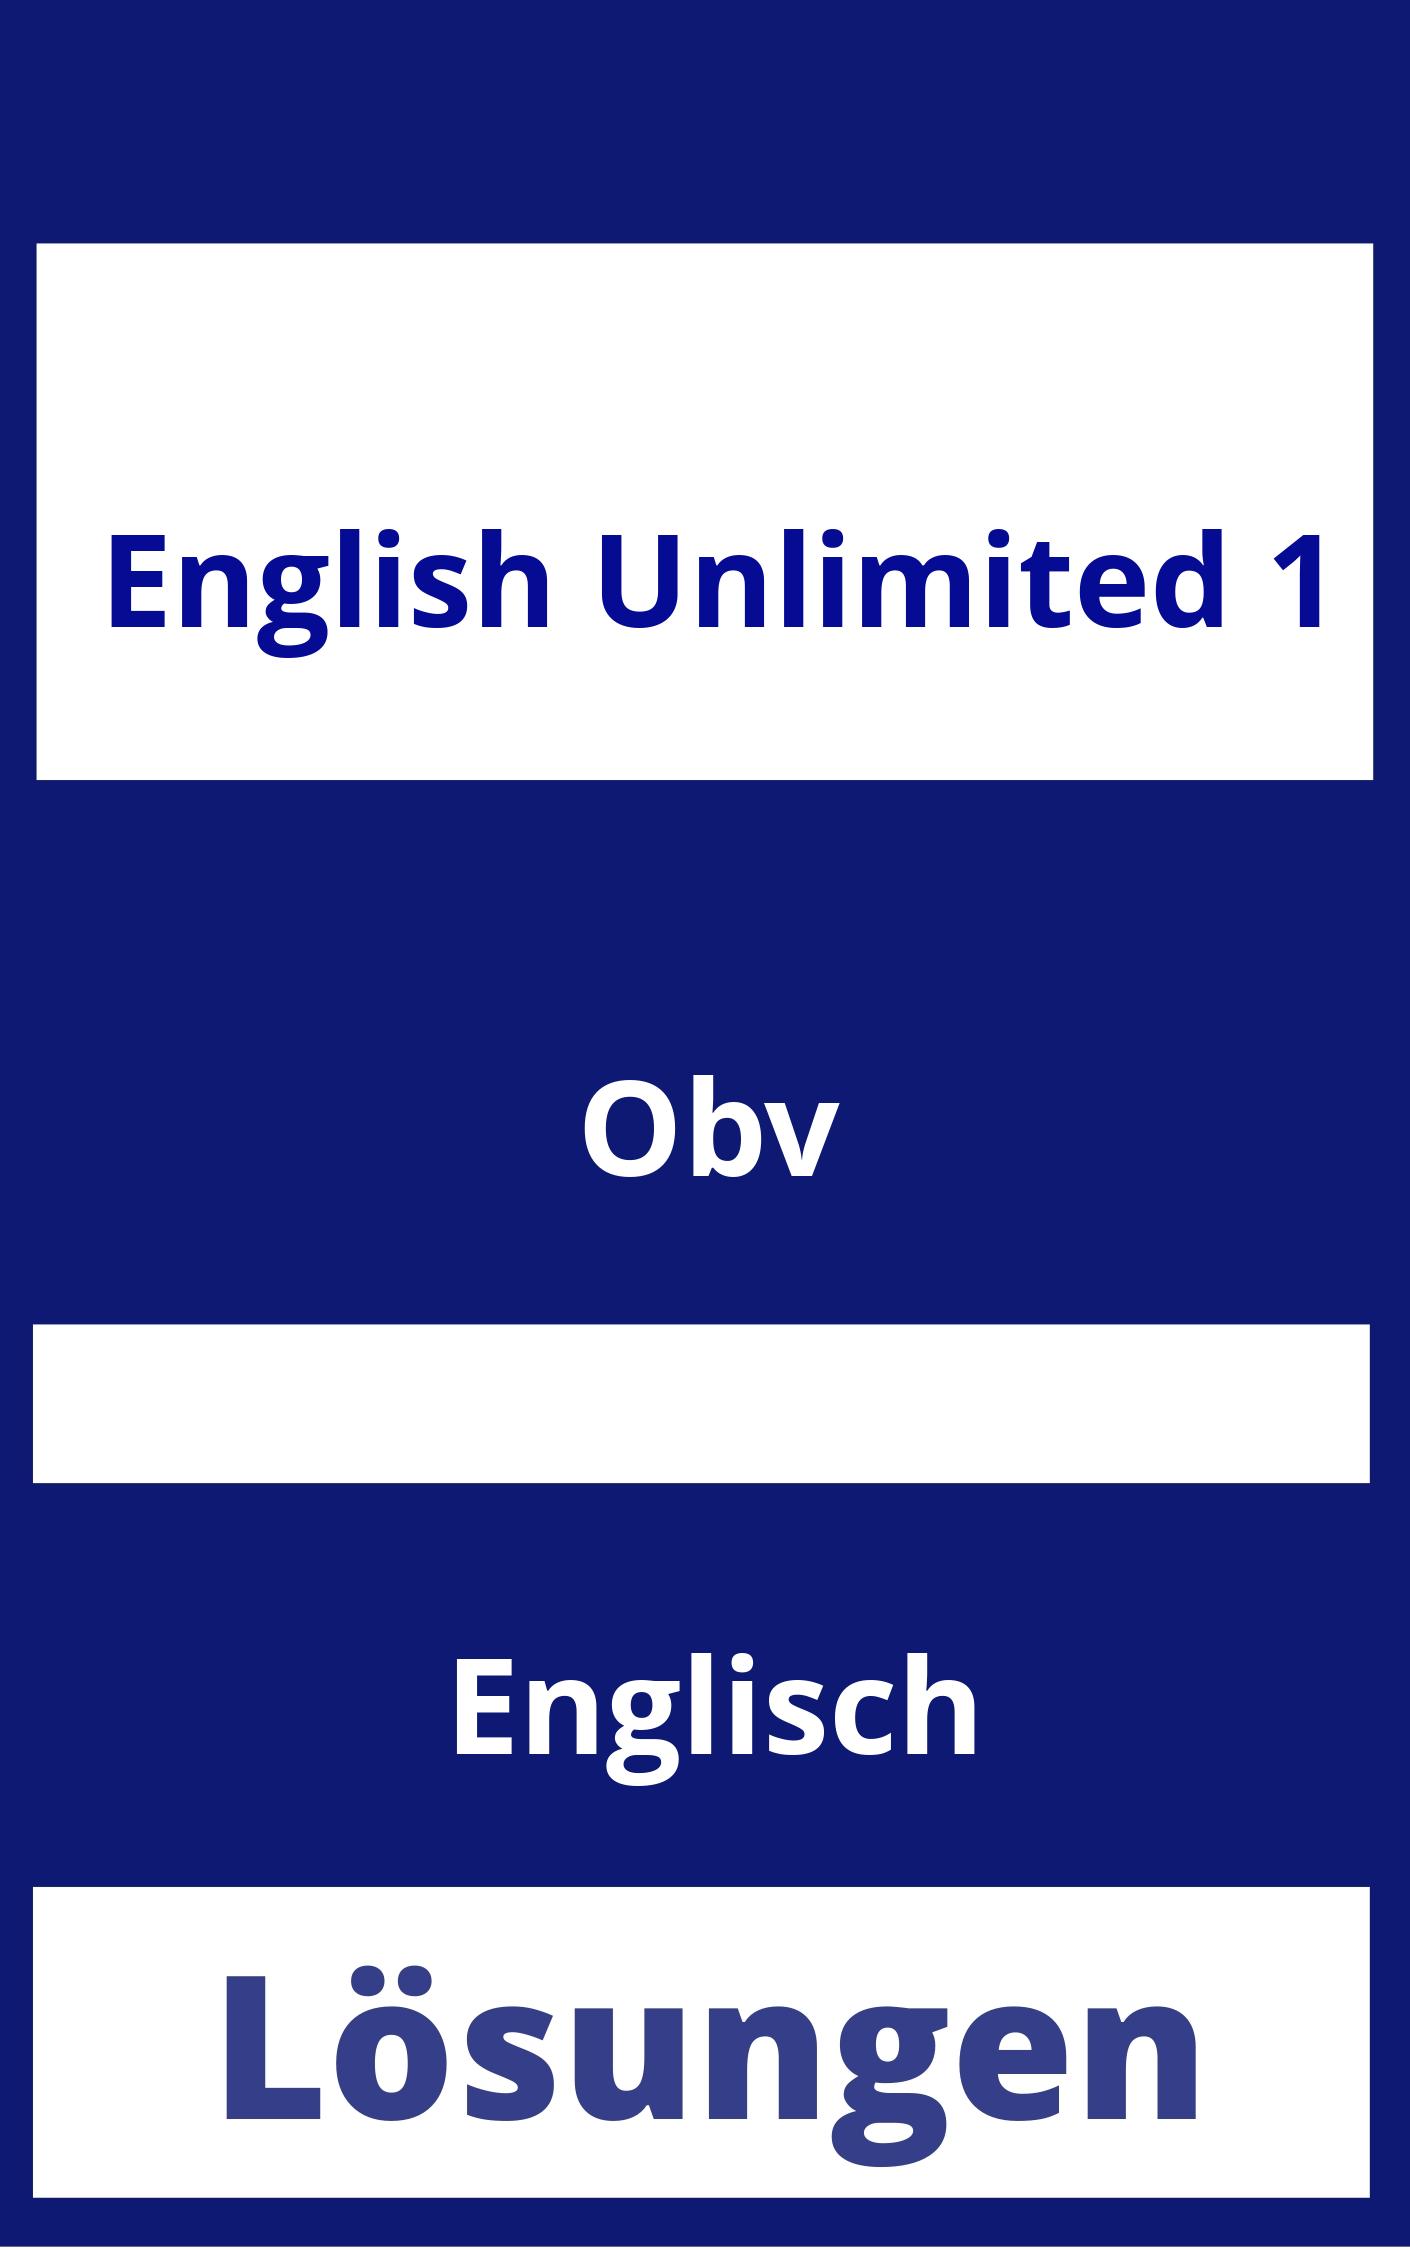 English Unlimited 1 Lösungen PDF